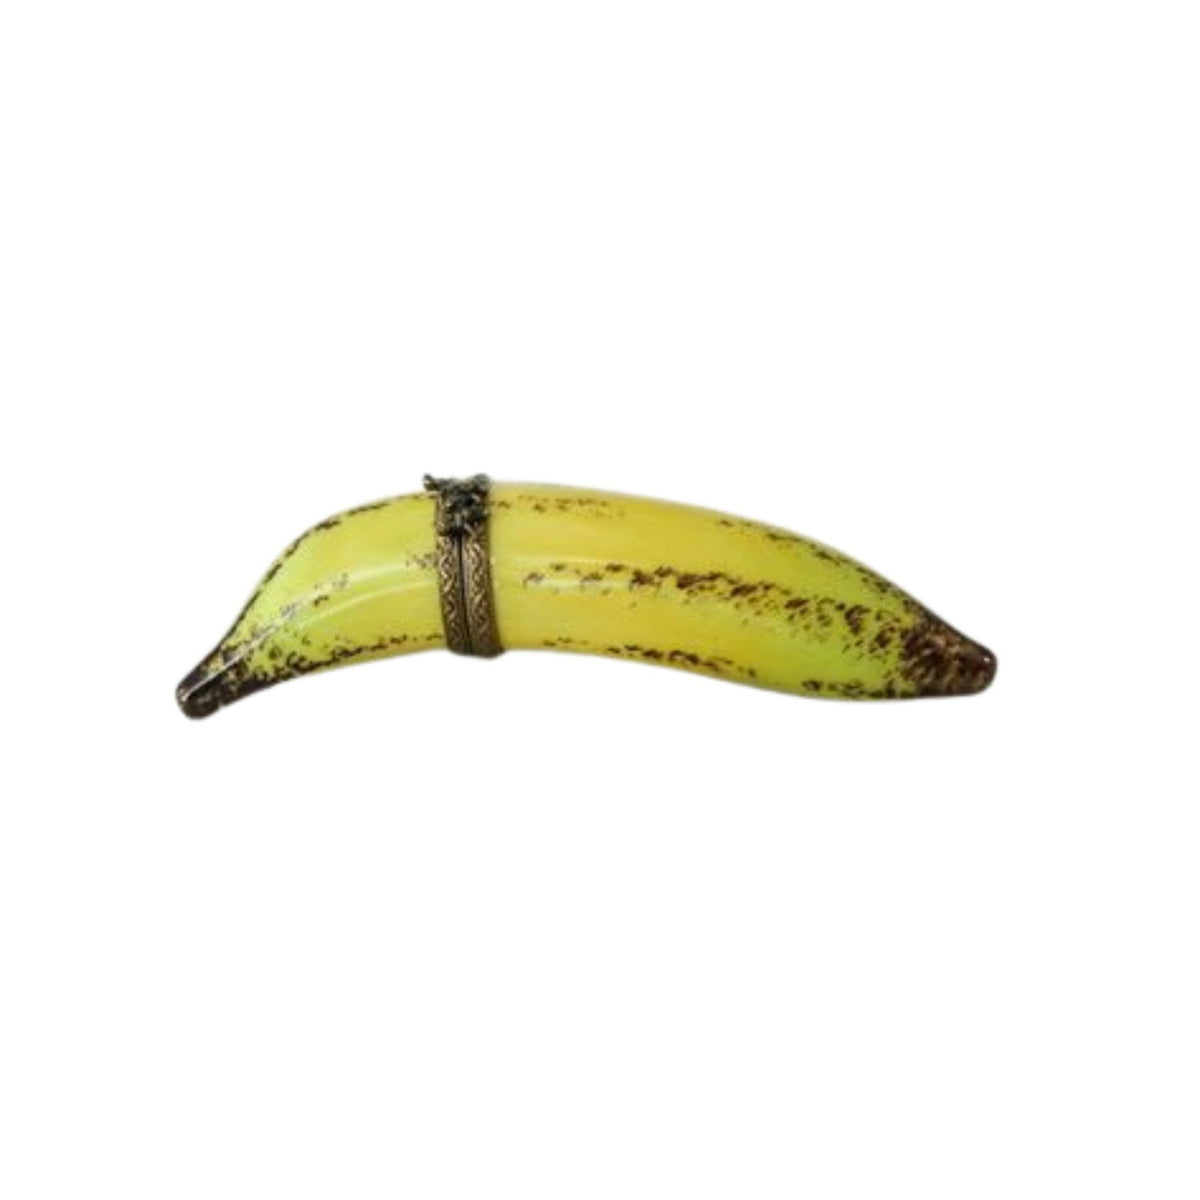 Banana - RARE and RETIRED - 3 Extra Days to Ship